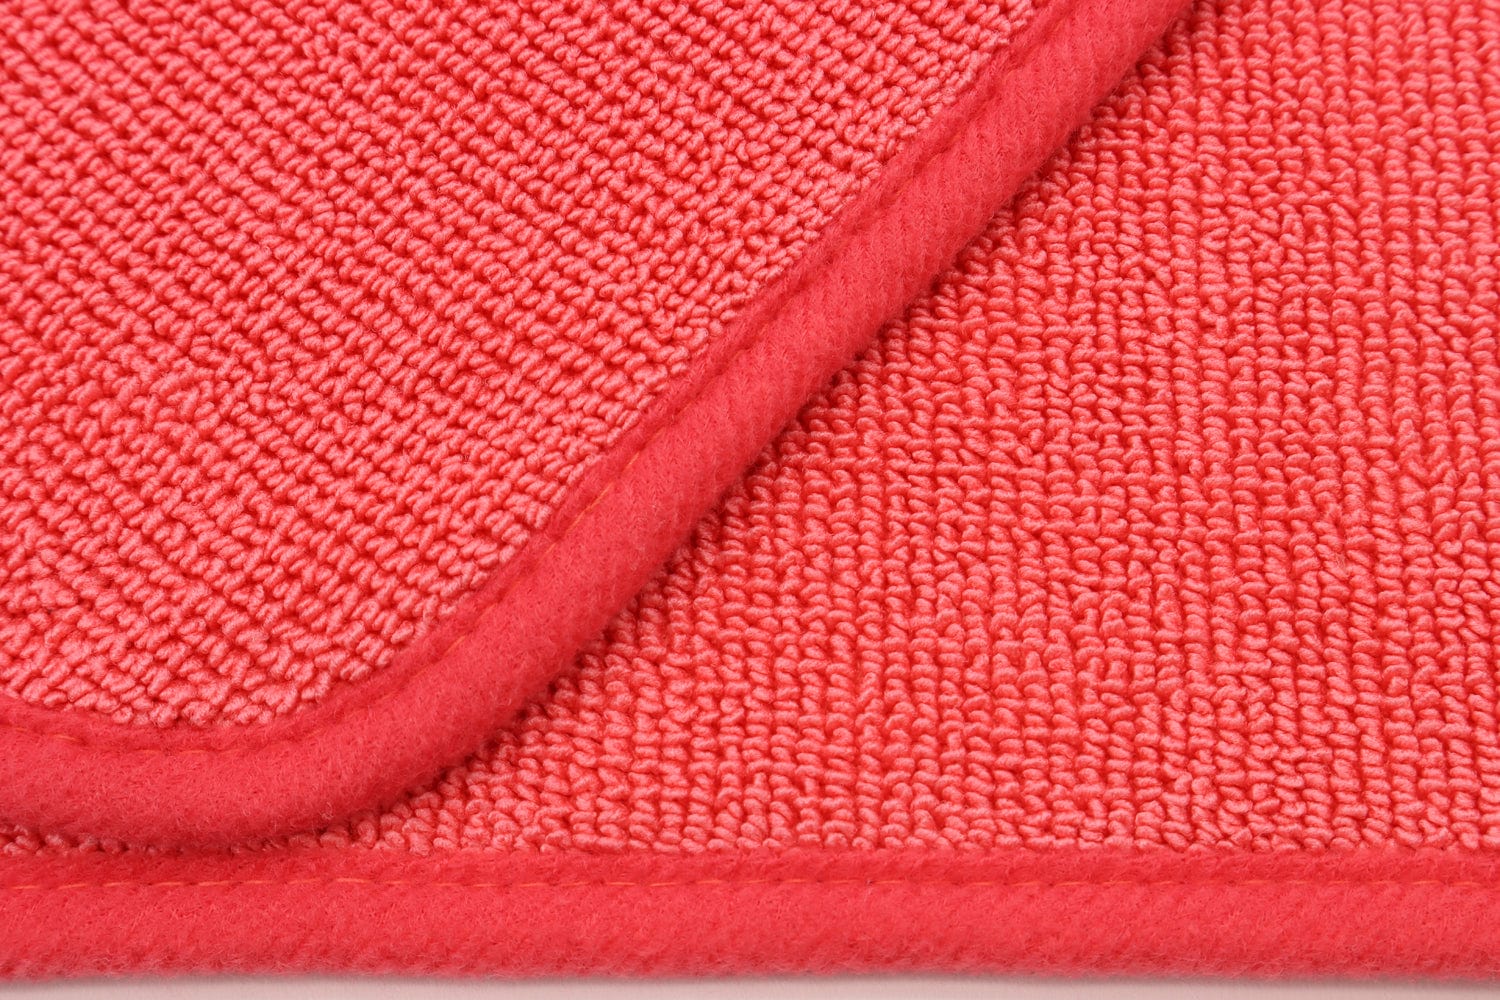 Autofiber Towel [Korean Twist] Microfiber Detailing Glass Towels (16 in. x 16 in. 600 gsm) 3 pack